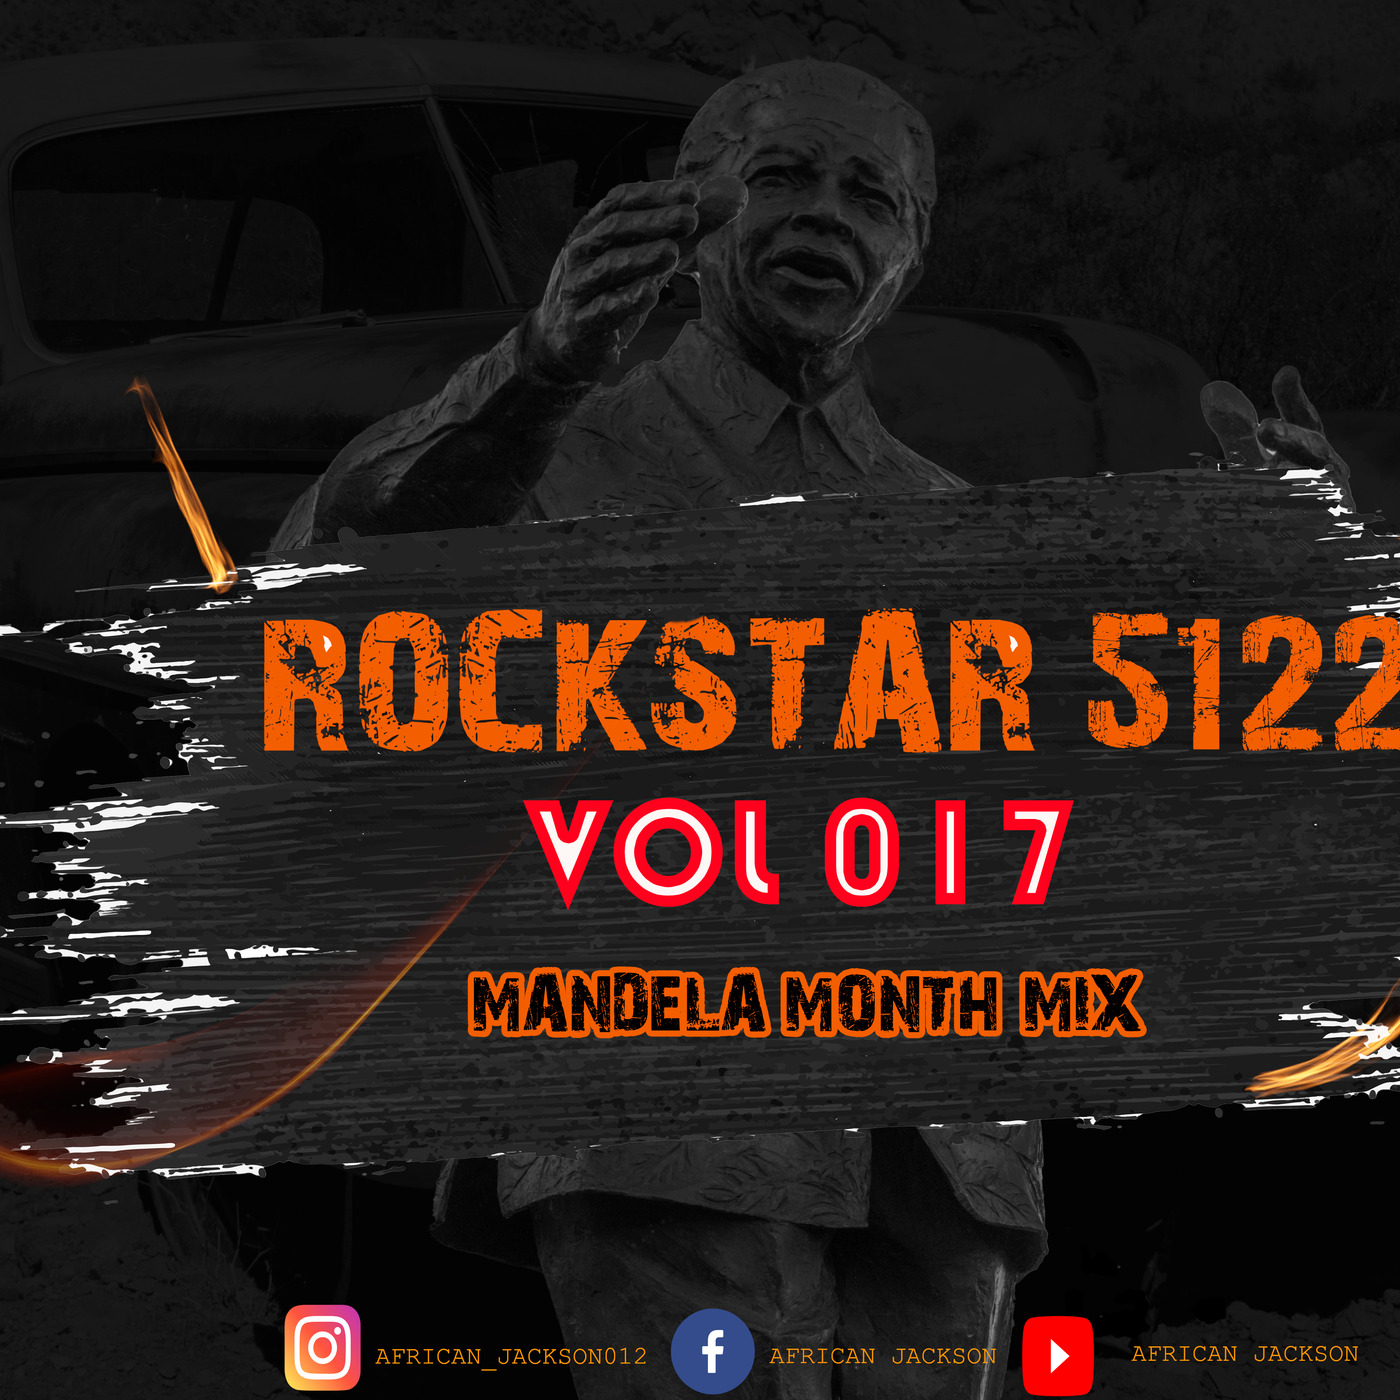 Rockstar 5122 Vol 017 [Mandela Month Mix] By African Jackson